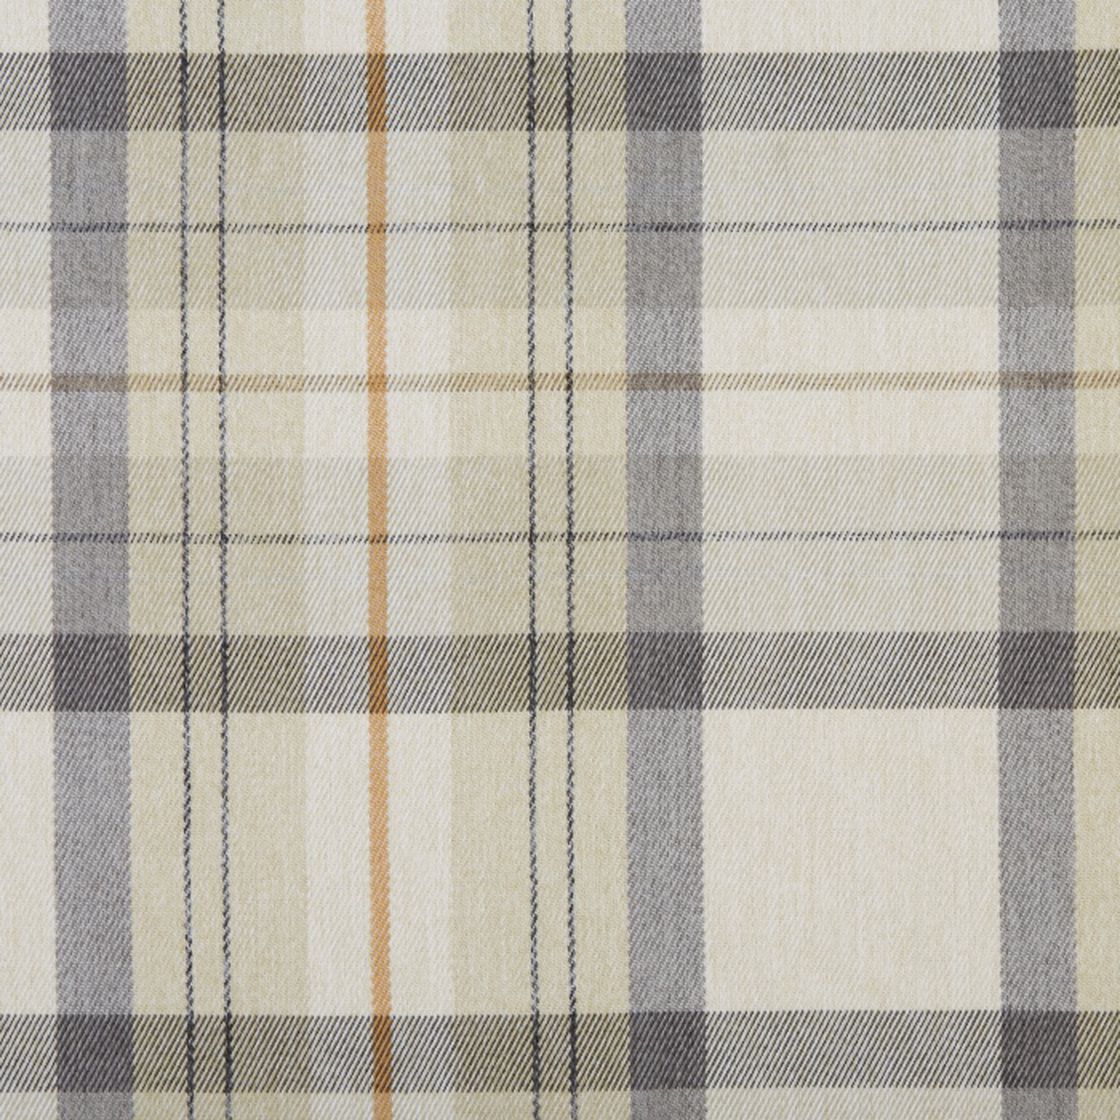 Lanark Tartan Plaid fabric from James Dunlop